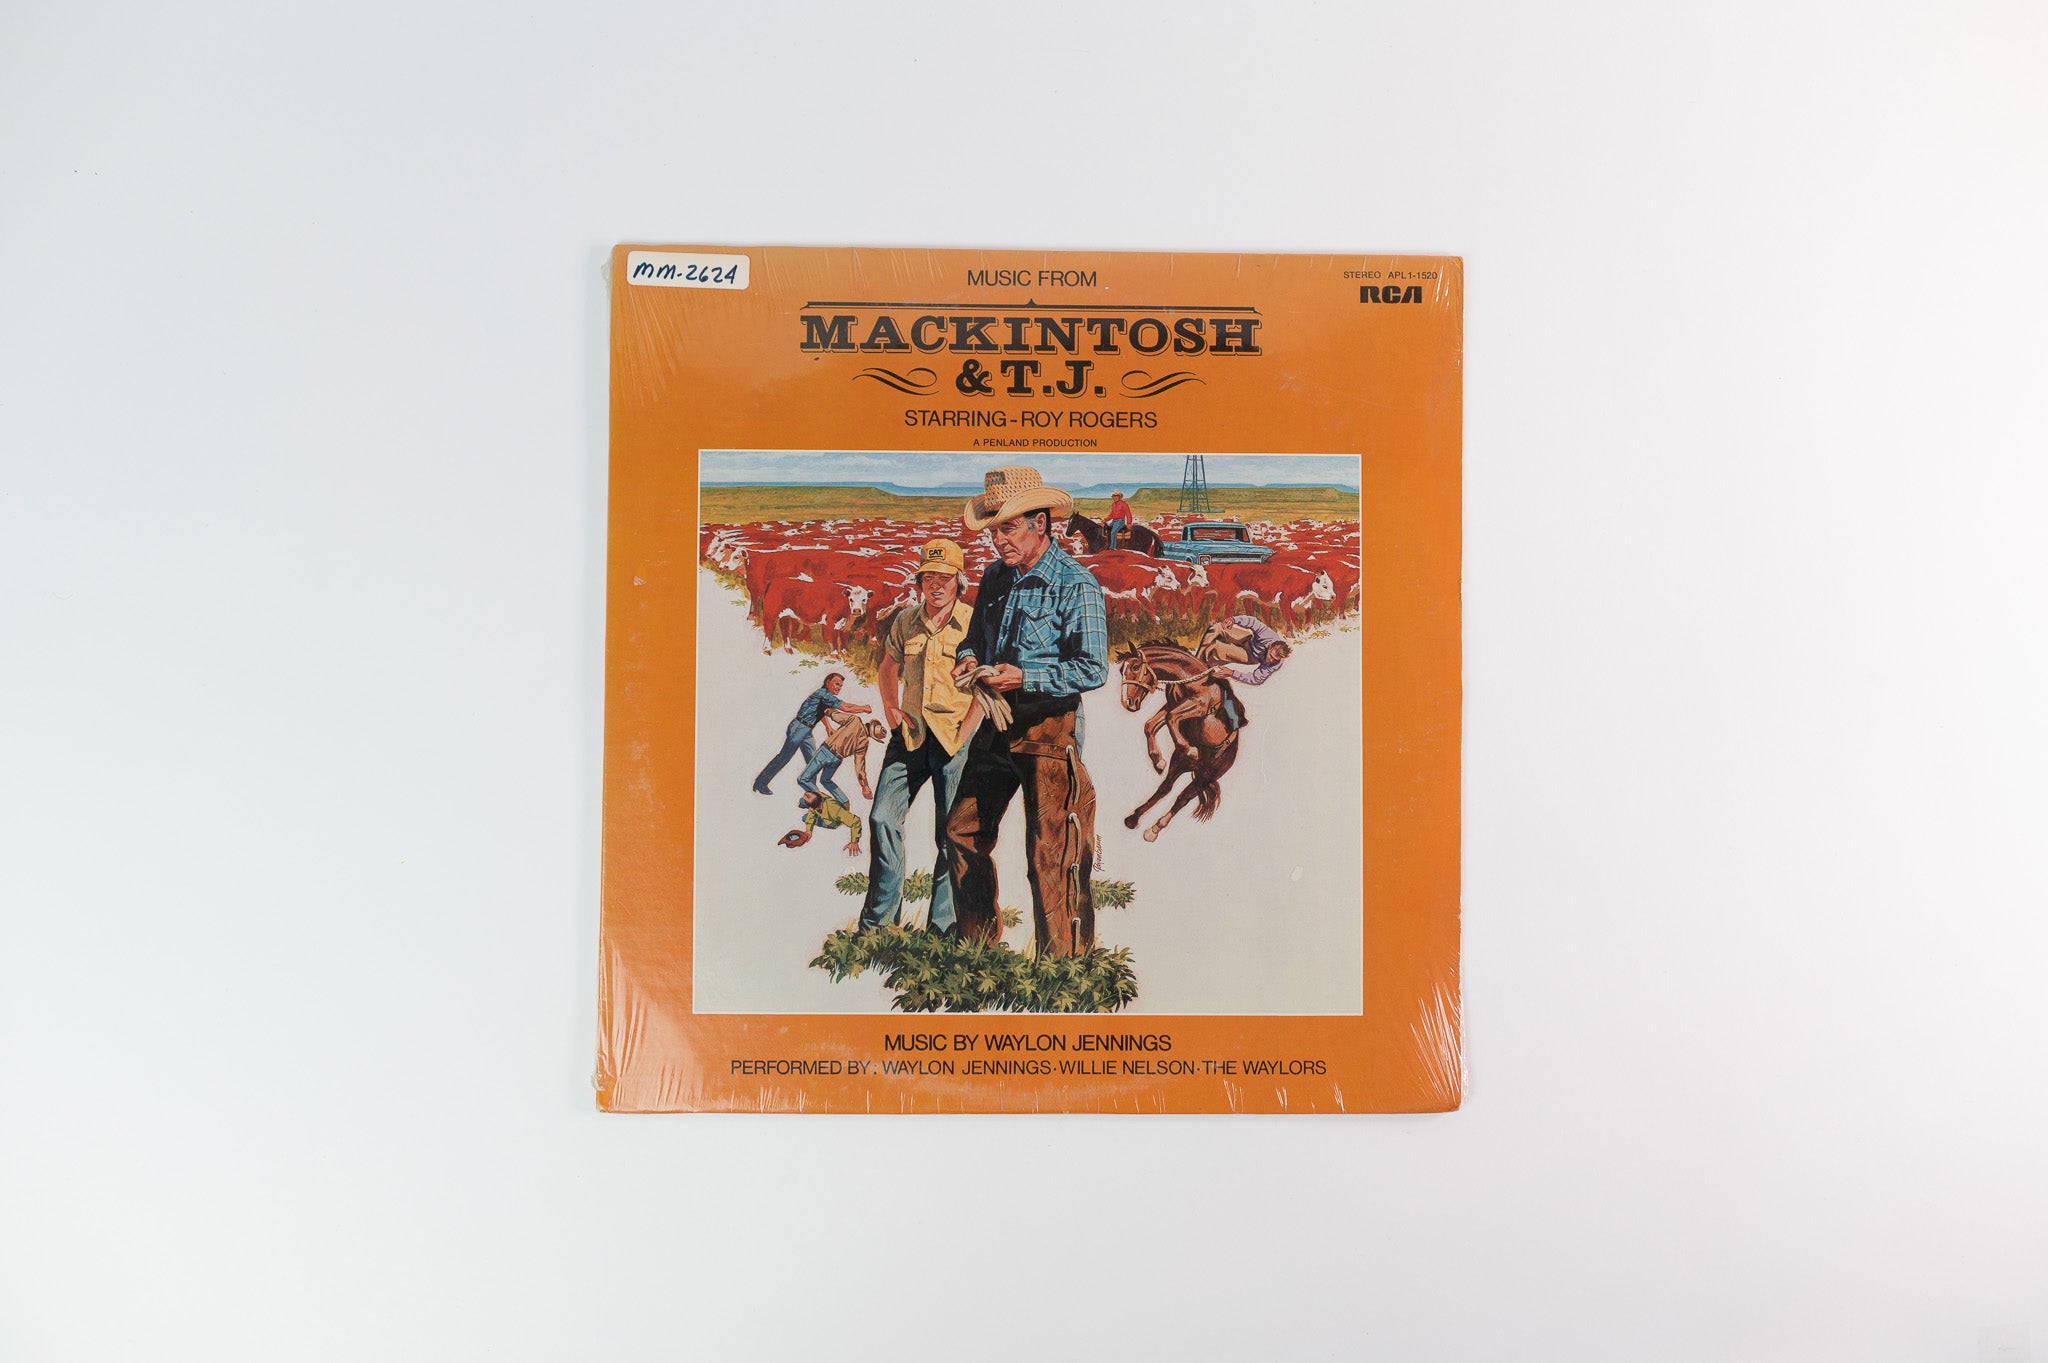 Waylon Jennings - Music From Mackintosh & T.J. on RCA Sealed